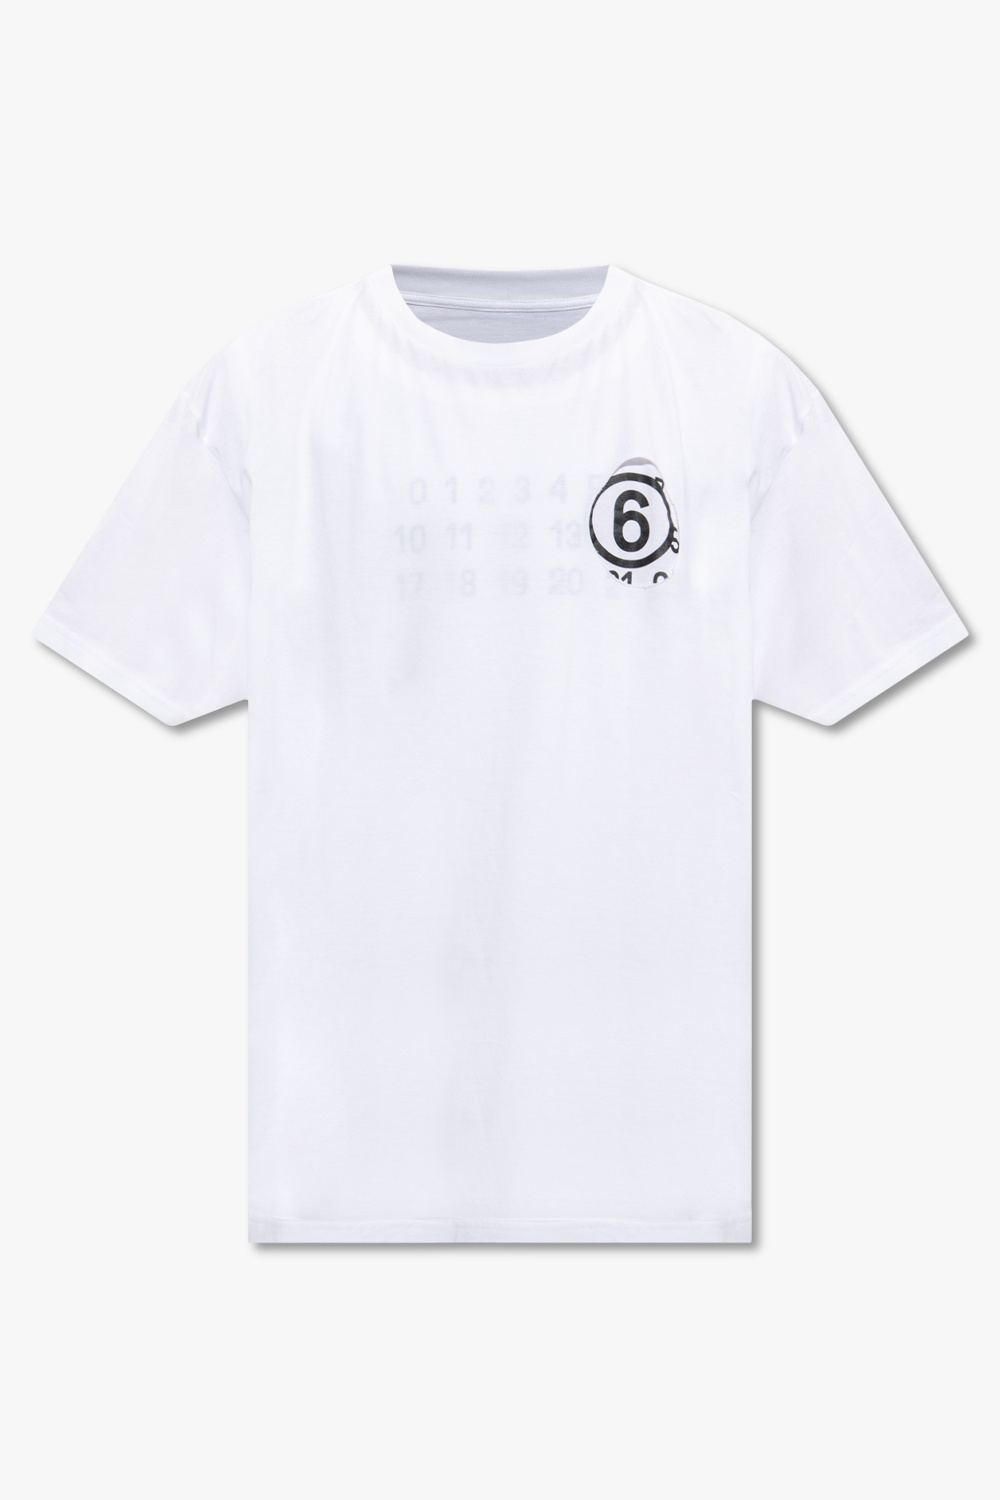 buy dirkje infant printed t chupa shirt sweatpants set T-shirt with logo